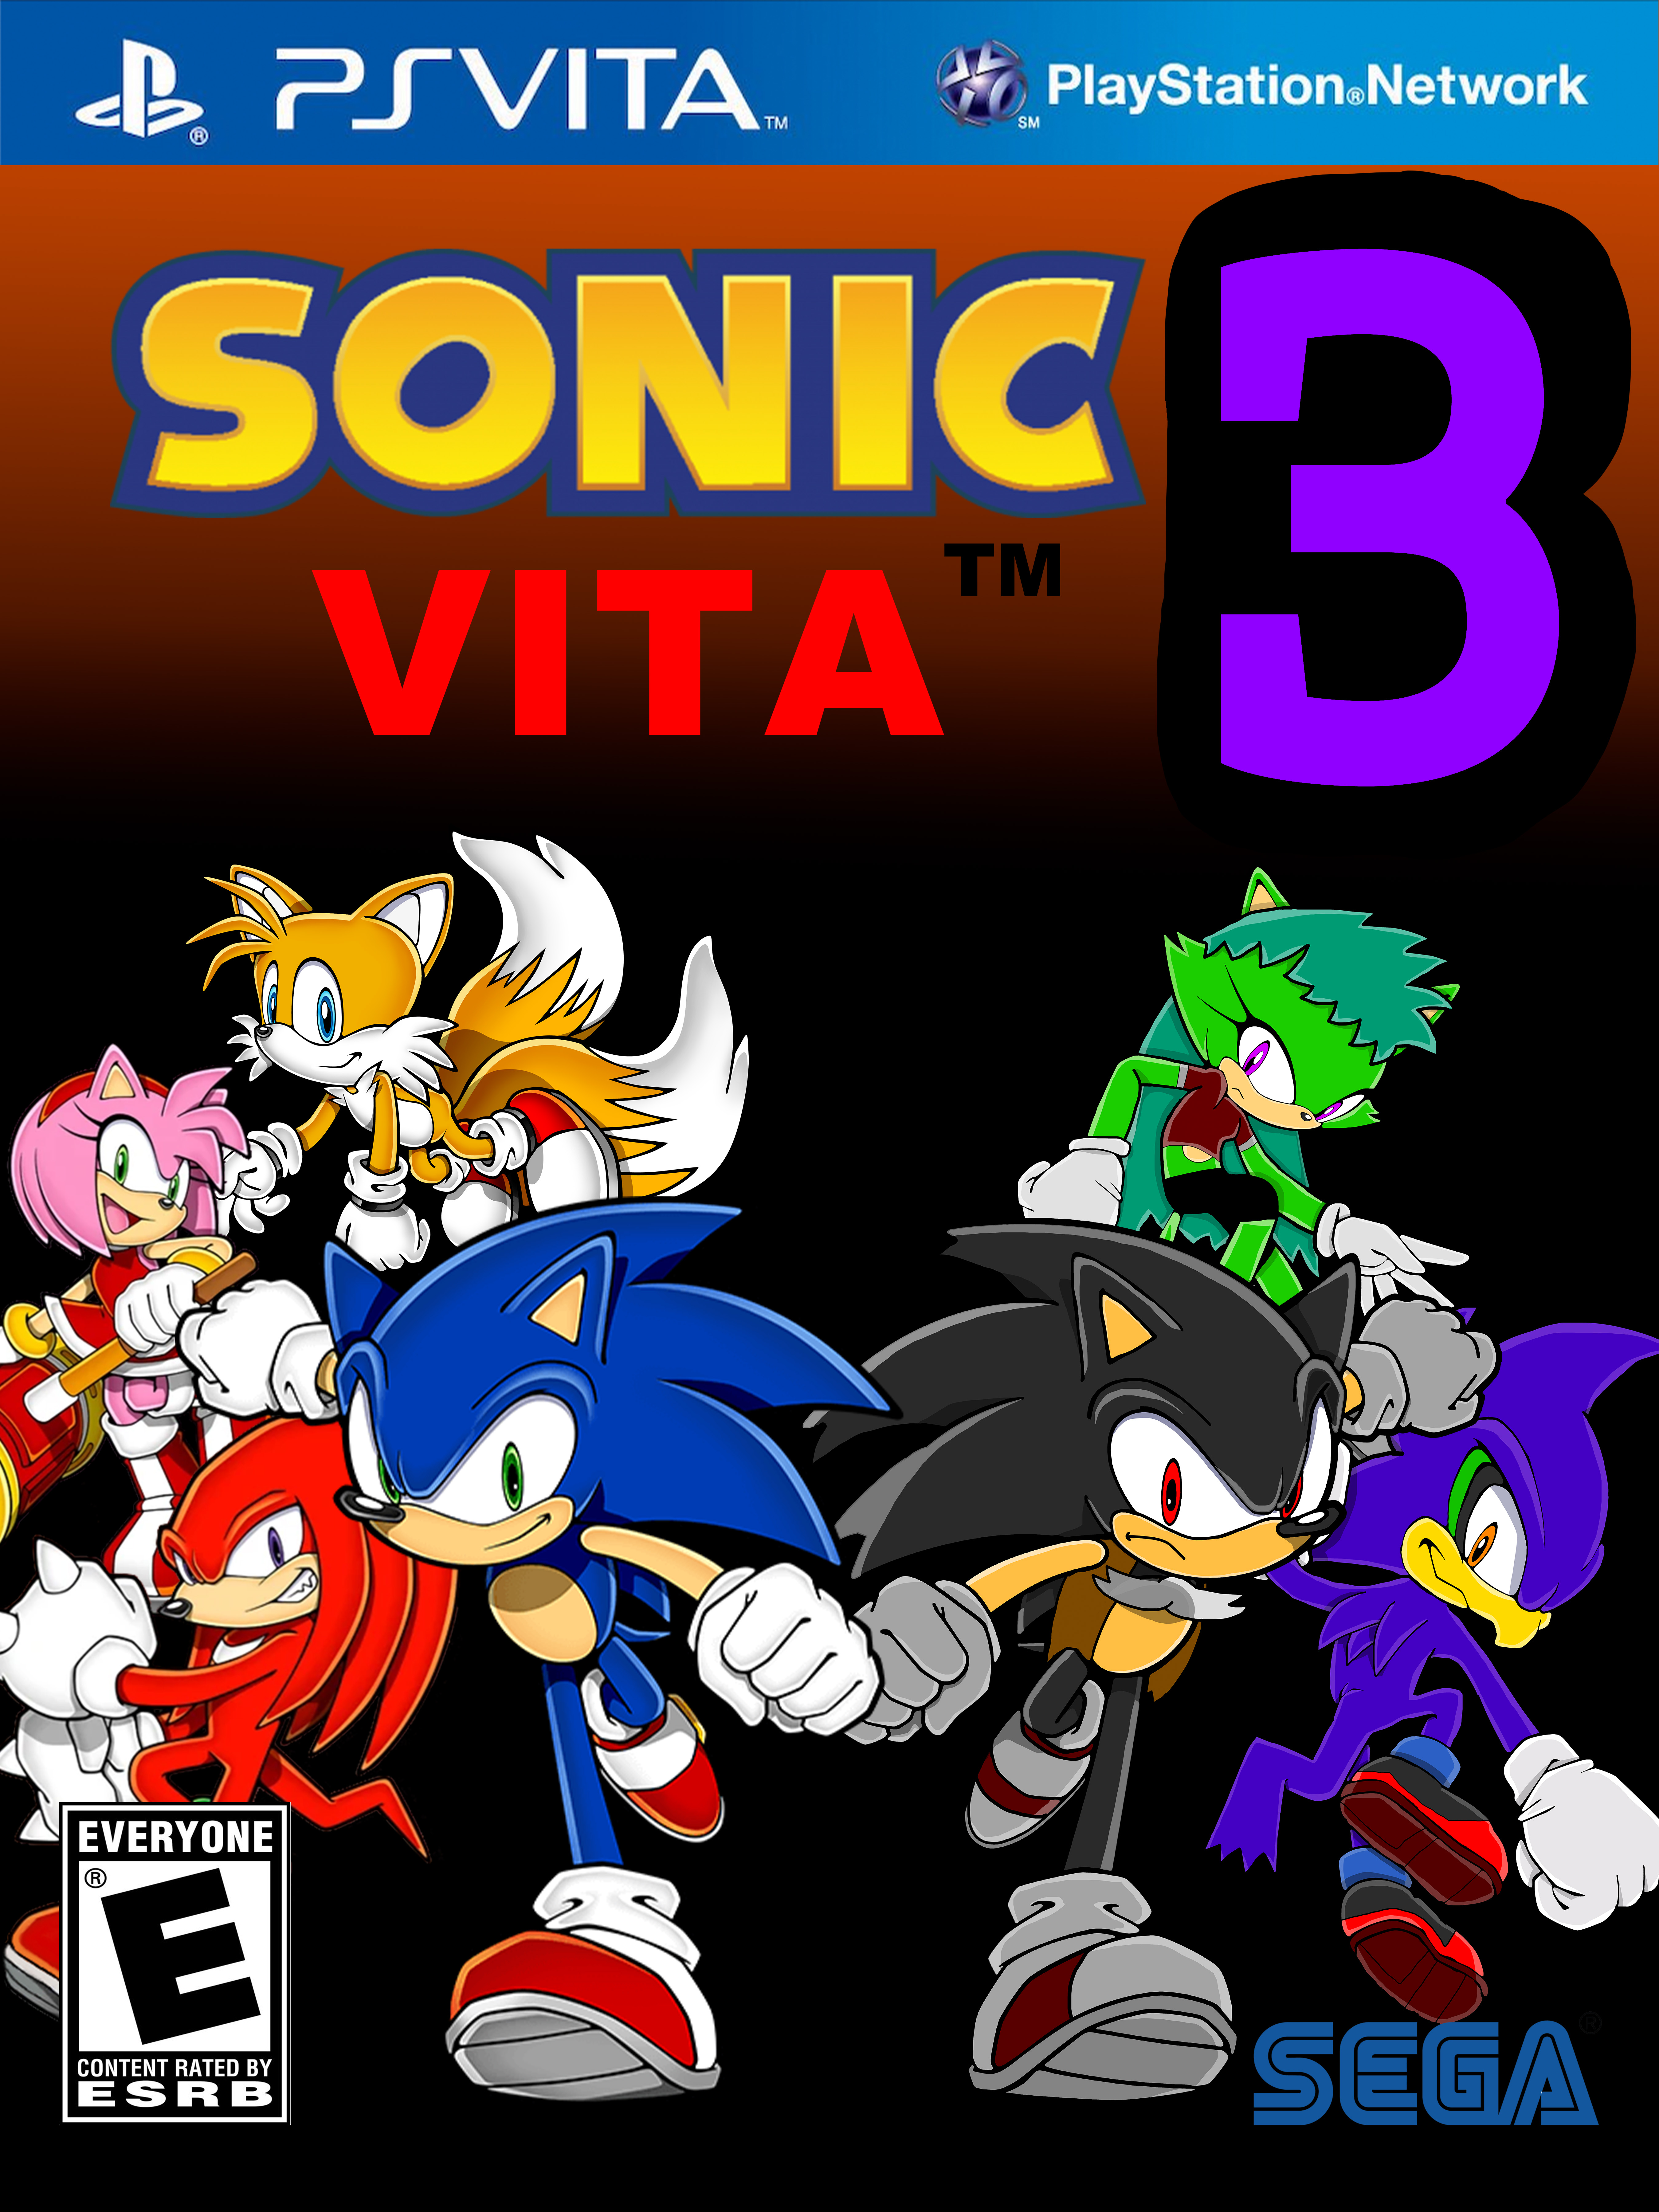 Sonic the Hedgehog 3 - GameSpot